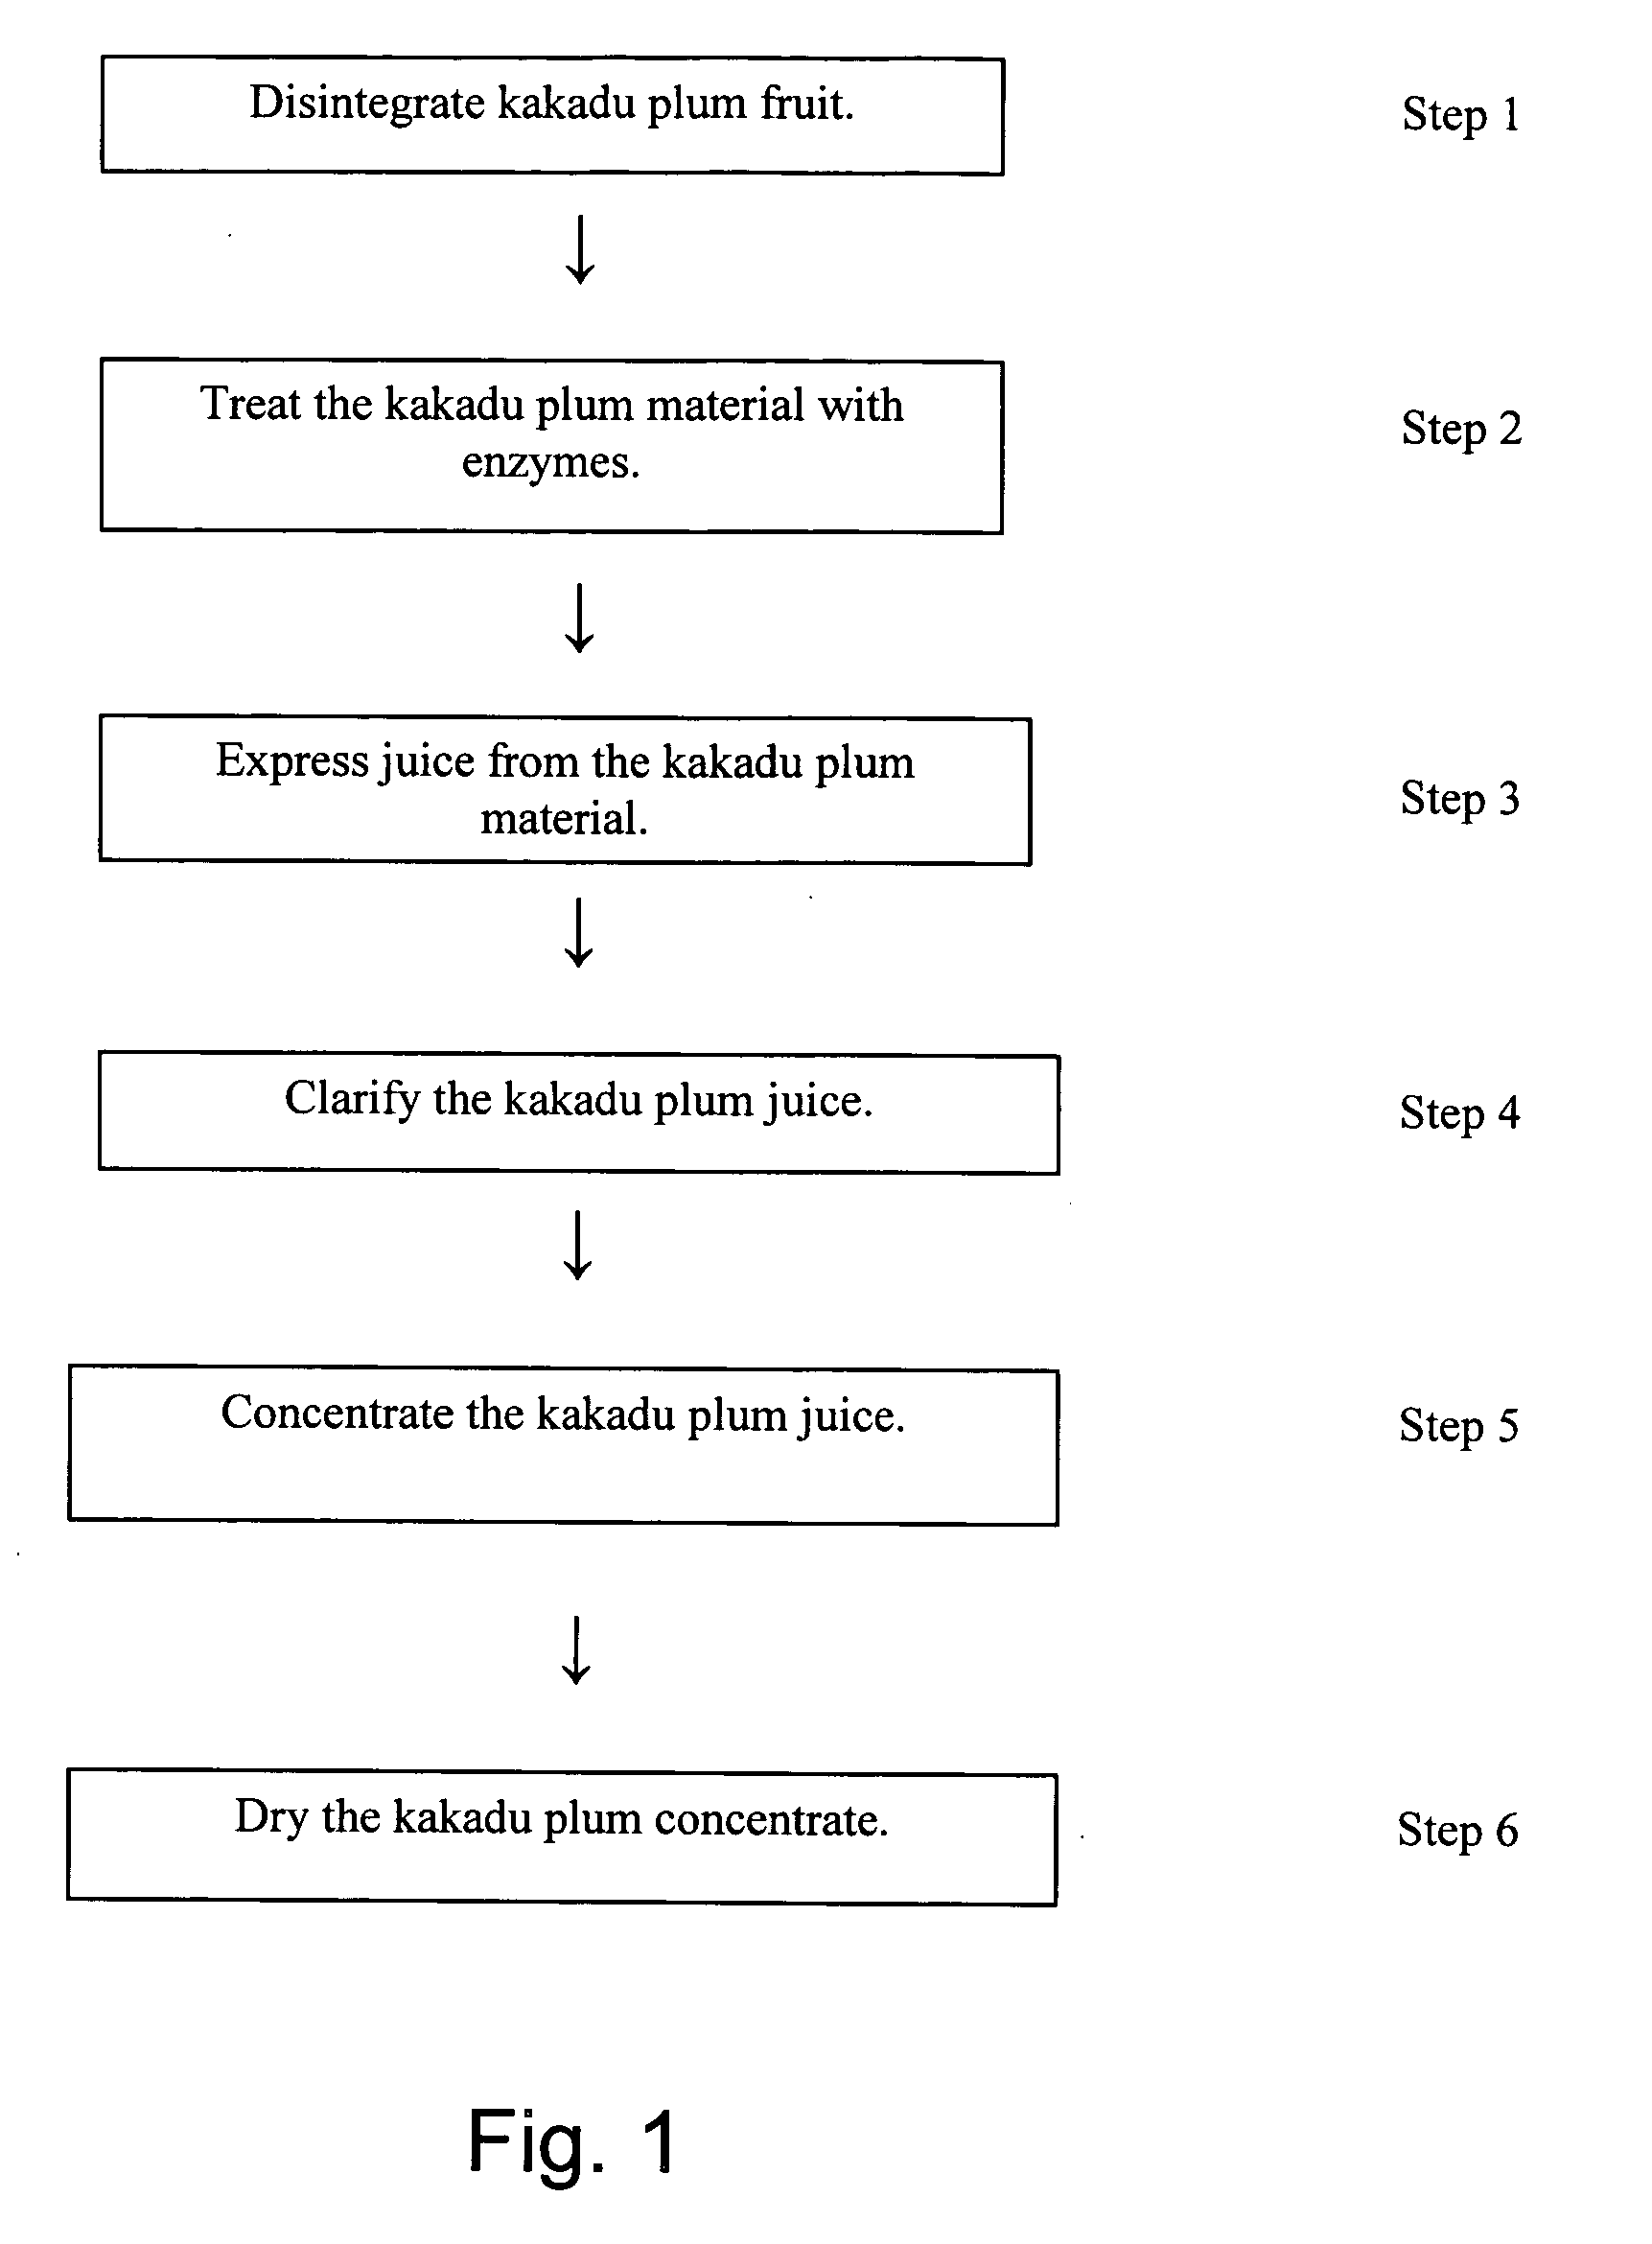 Method of preparing kakadu plum powder